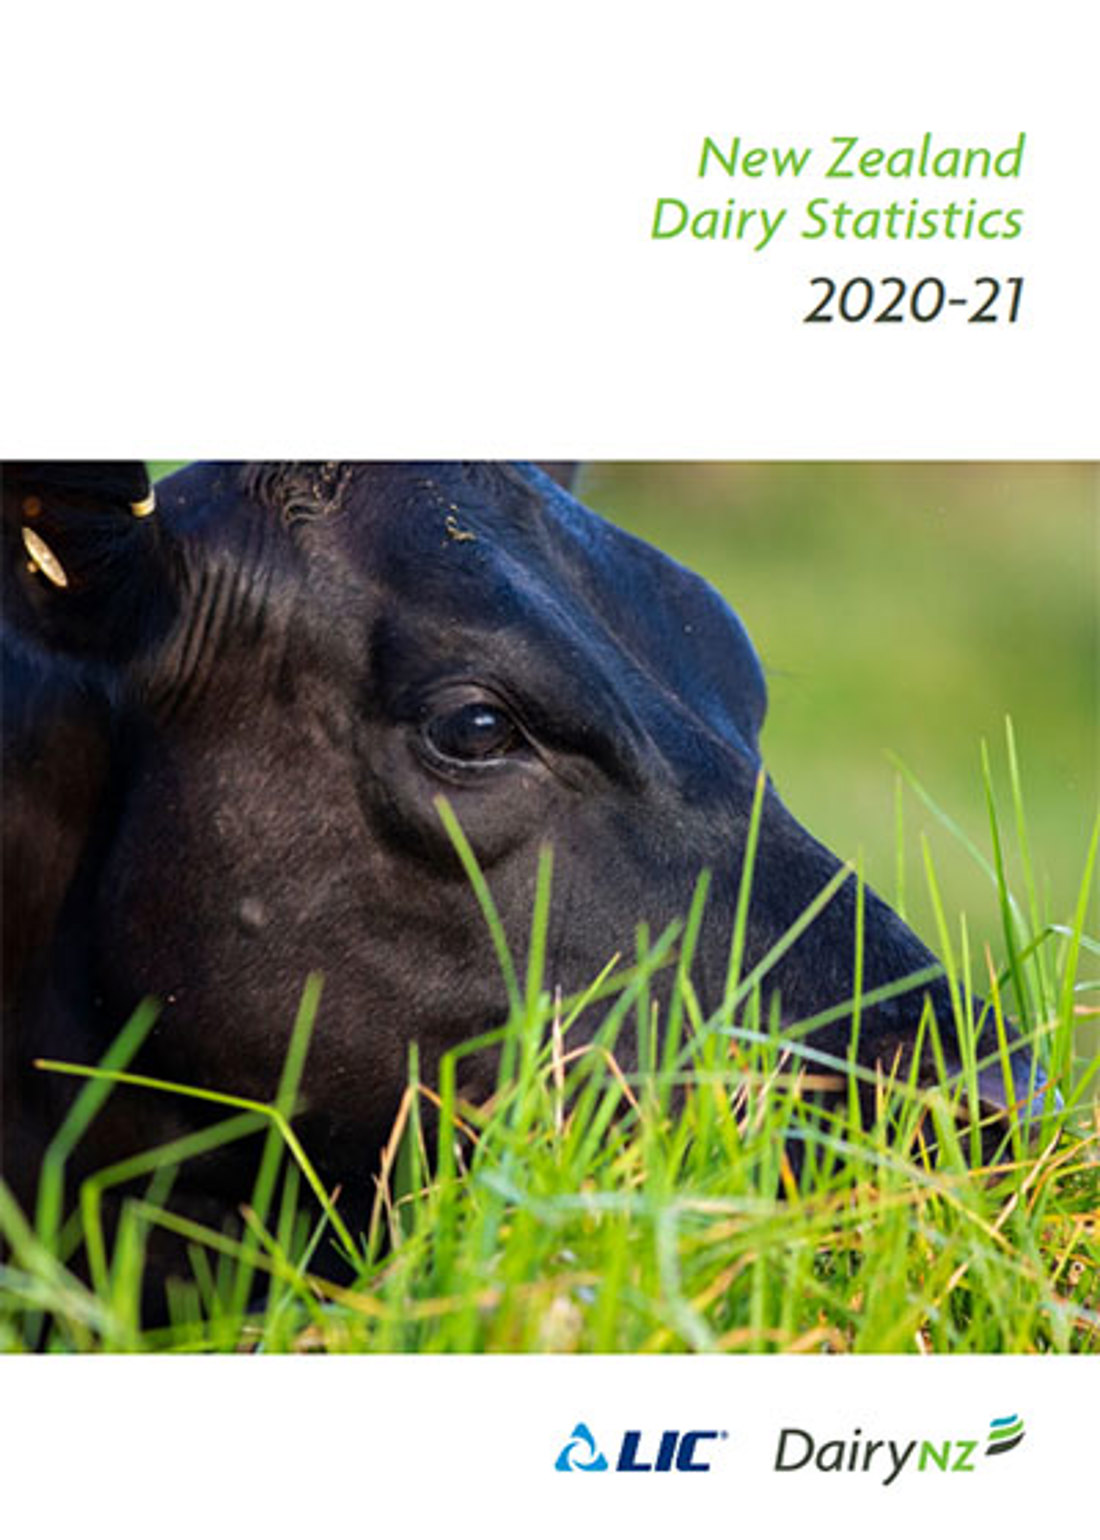 Nz Dairy Stats 2020 21 Image